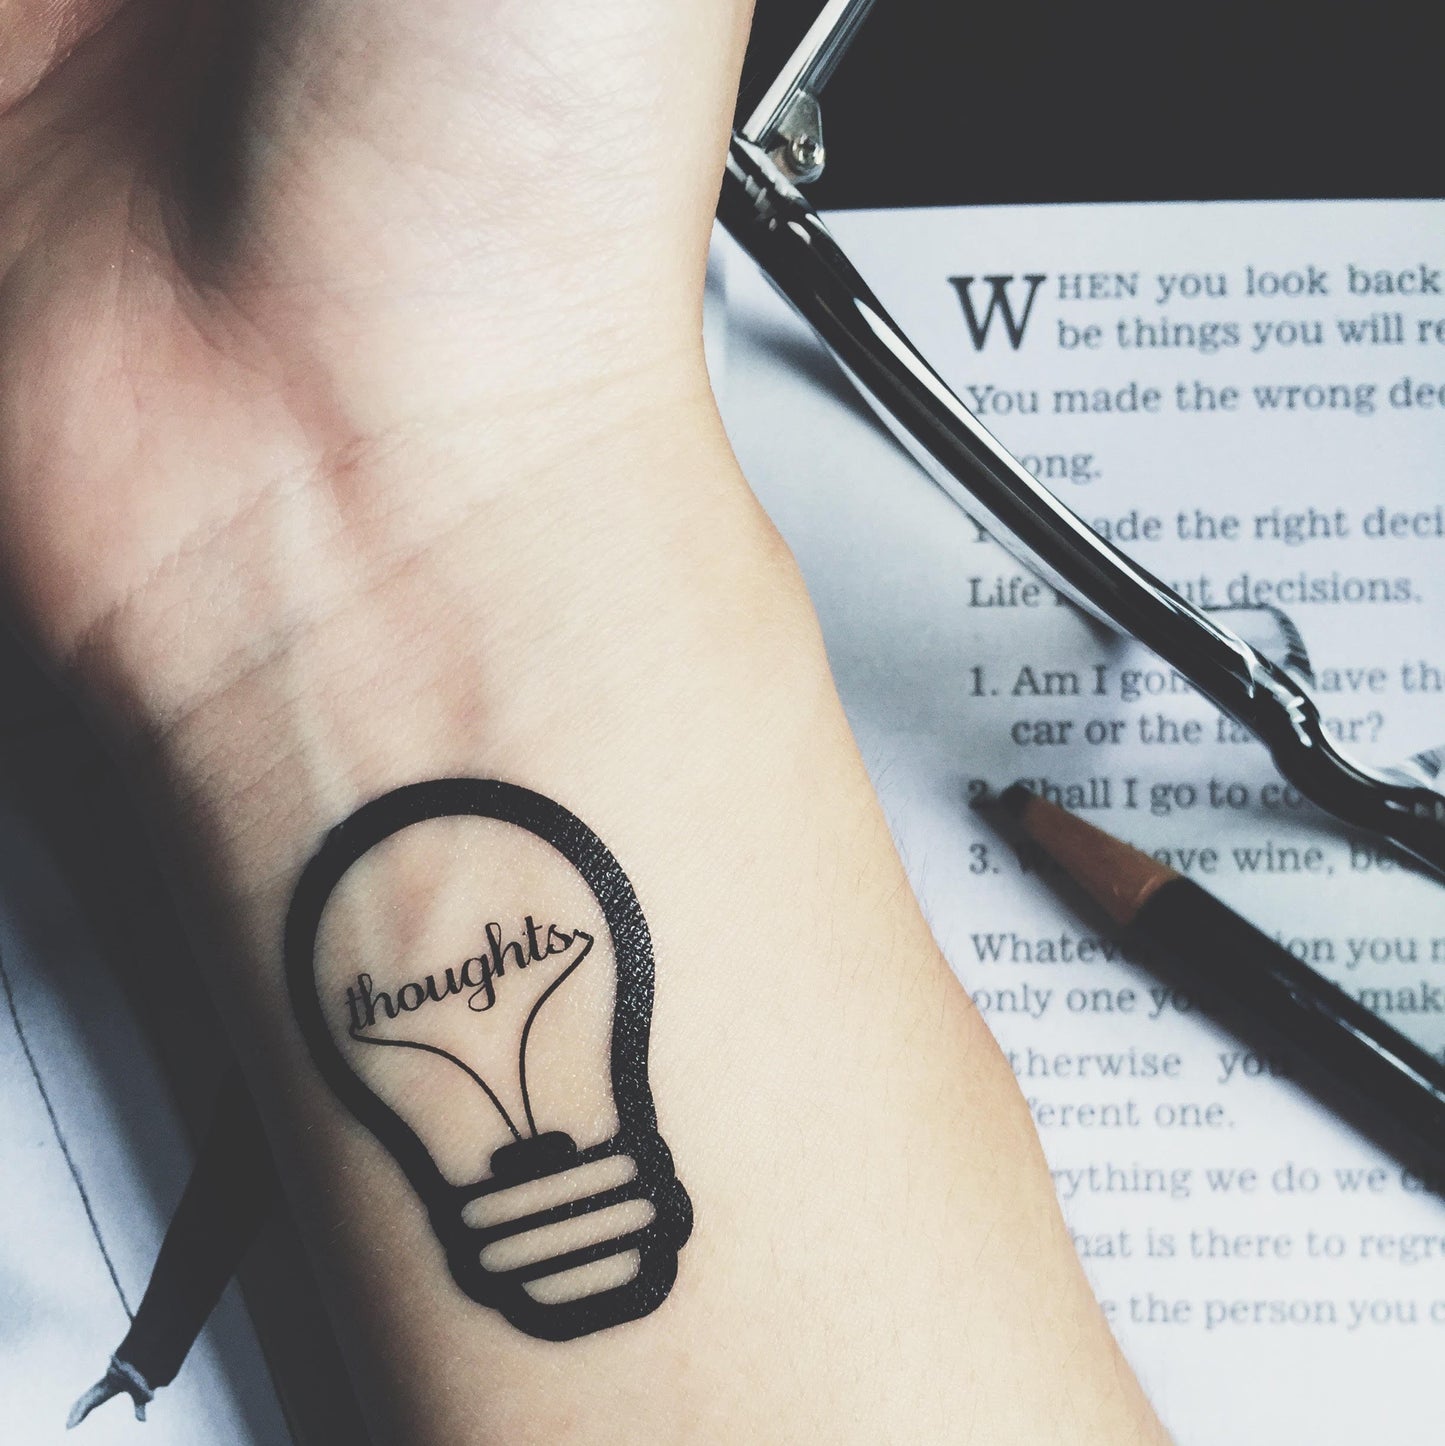 fake small light bulb lightbulb illustrative temporary tattoo sticker design idea on wrist